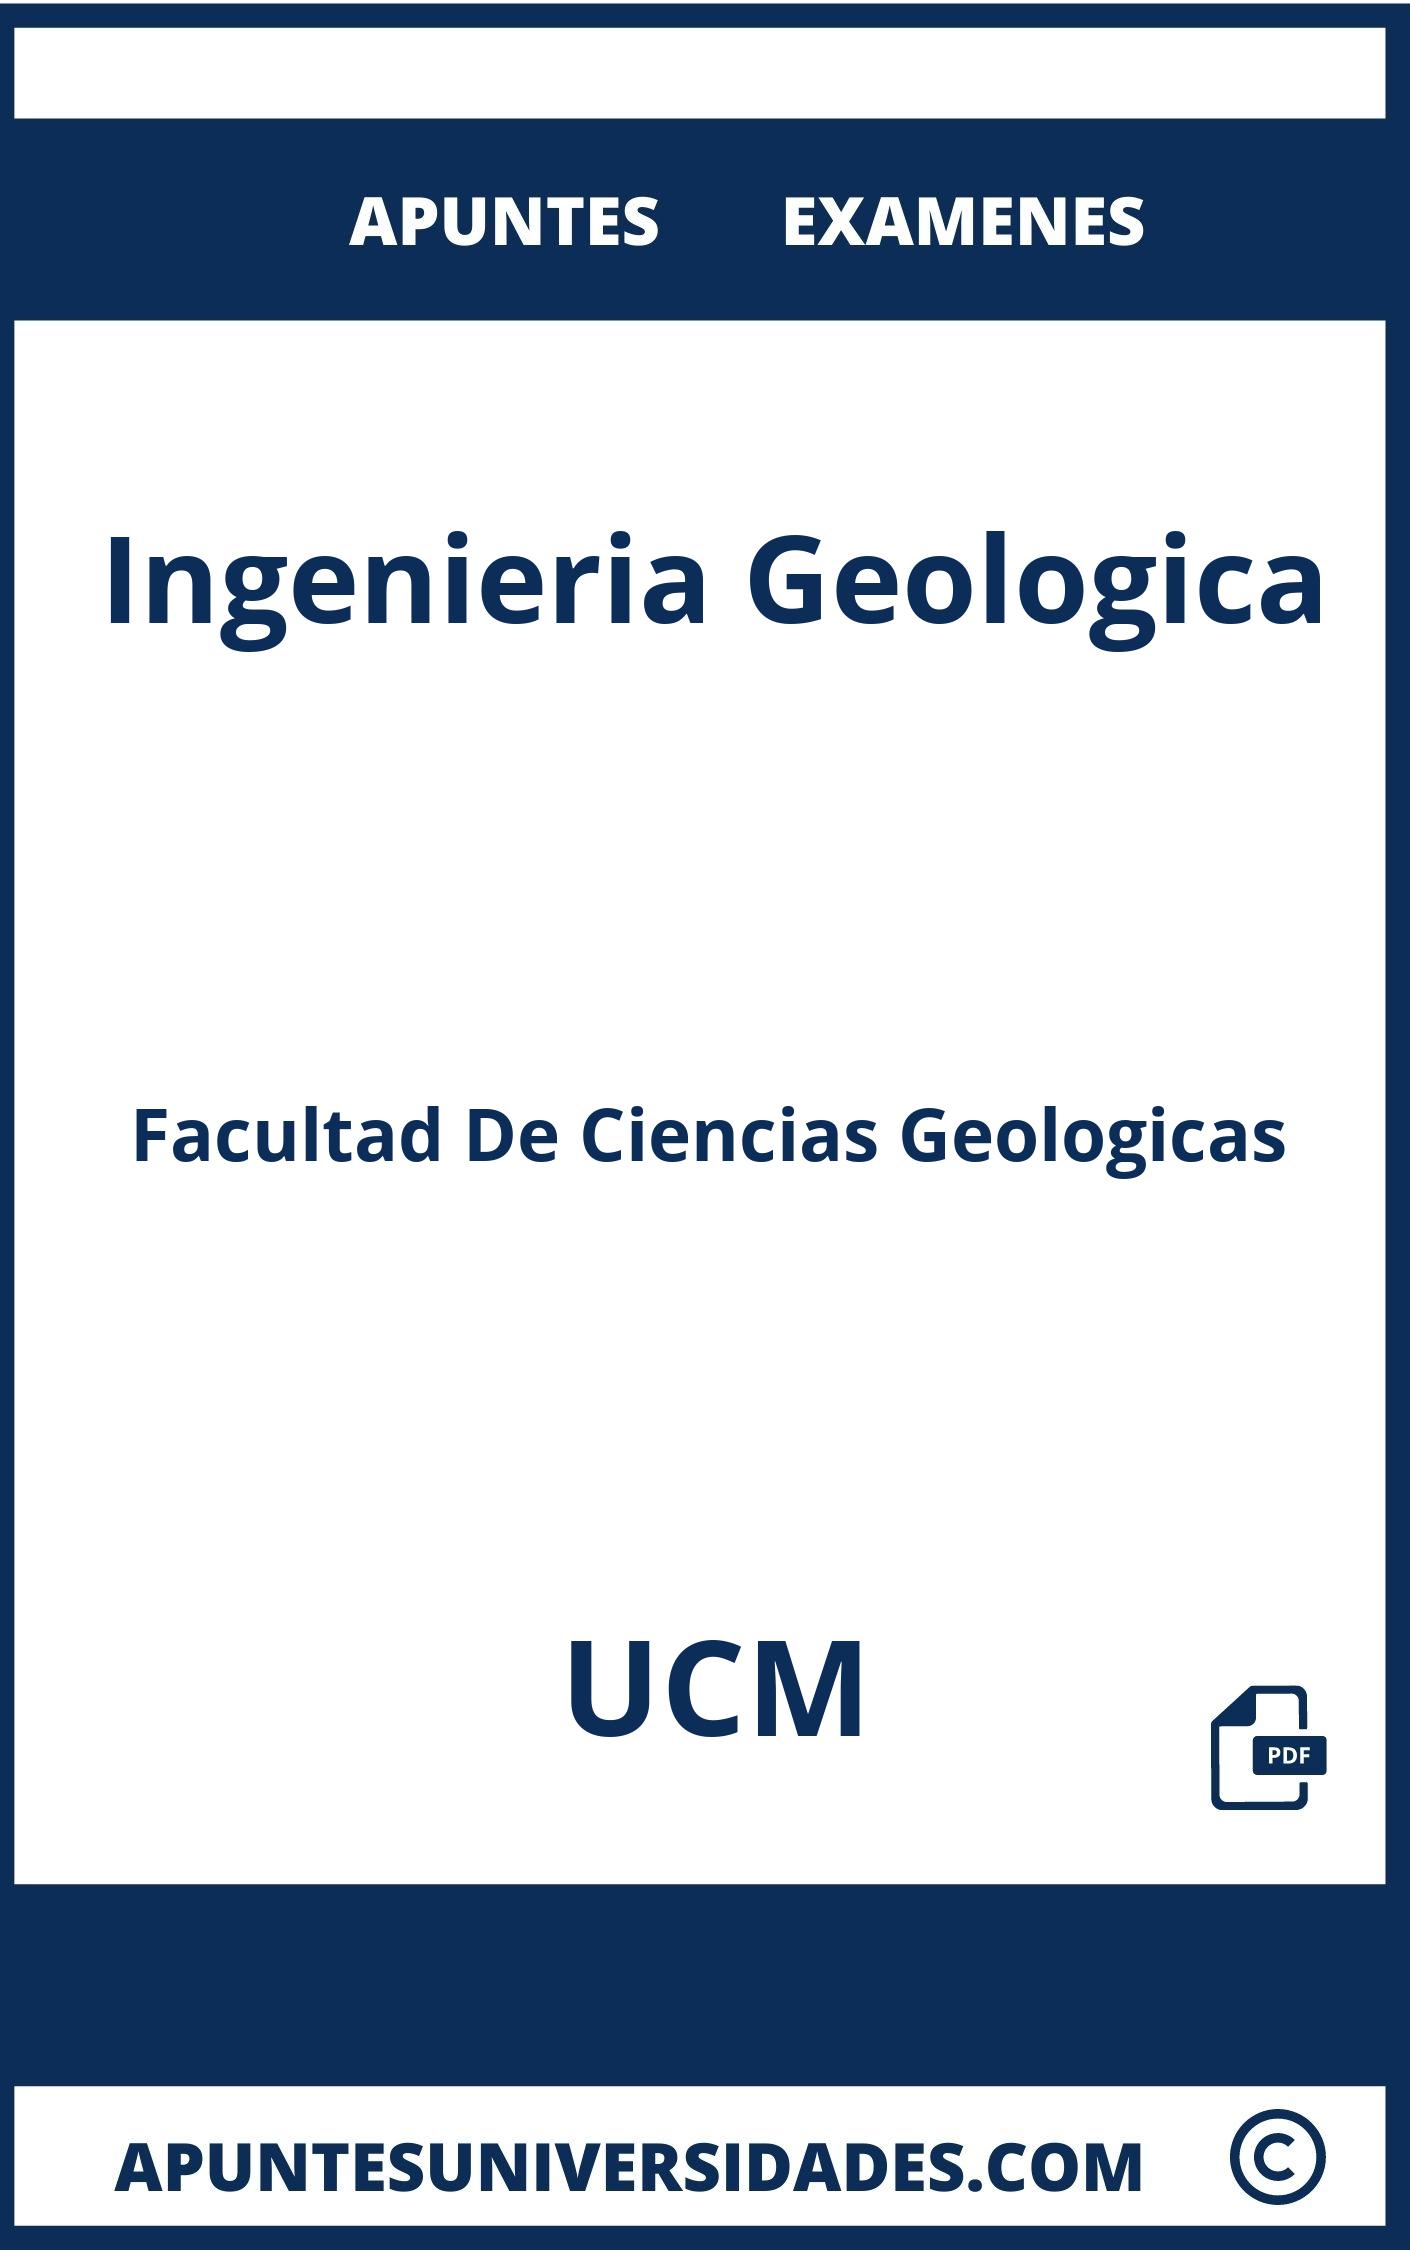 Examenes Ingenieria Geologica UCM y Apuntes